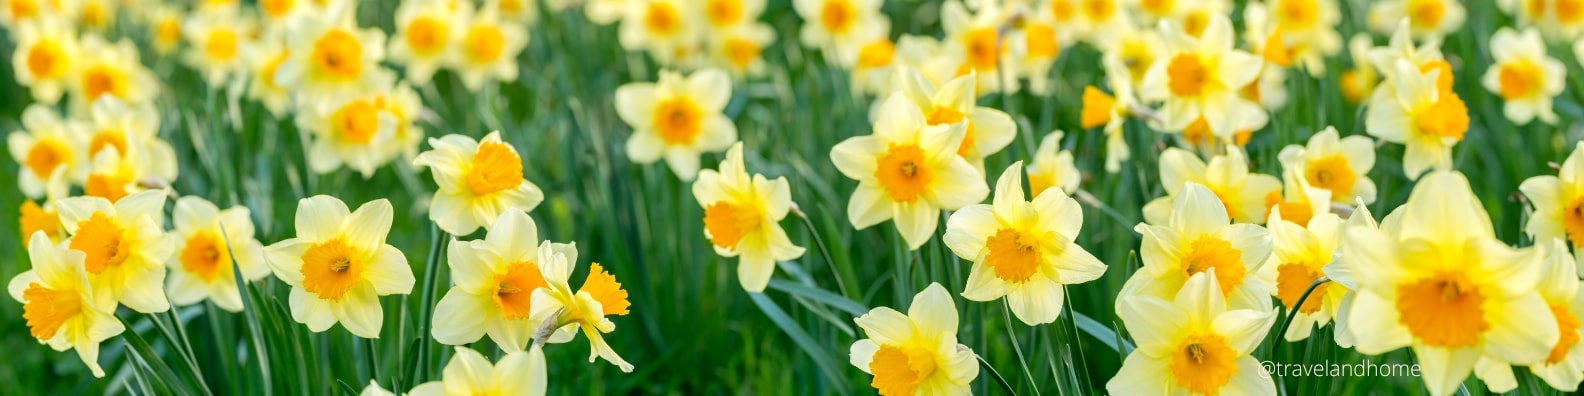 Best Spots for Spring Flowers Daffodils Keukenhof Netherlands travel and home min